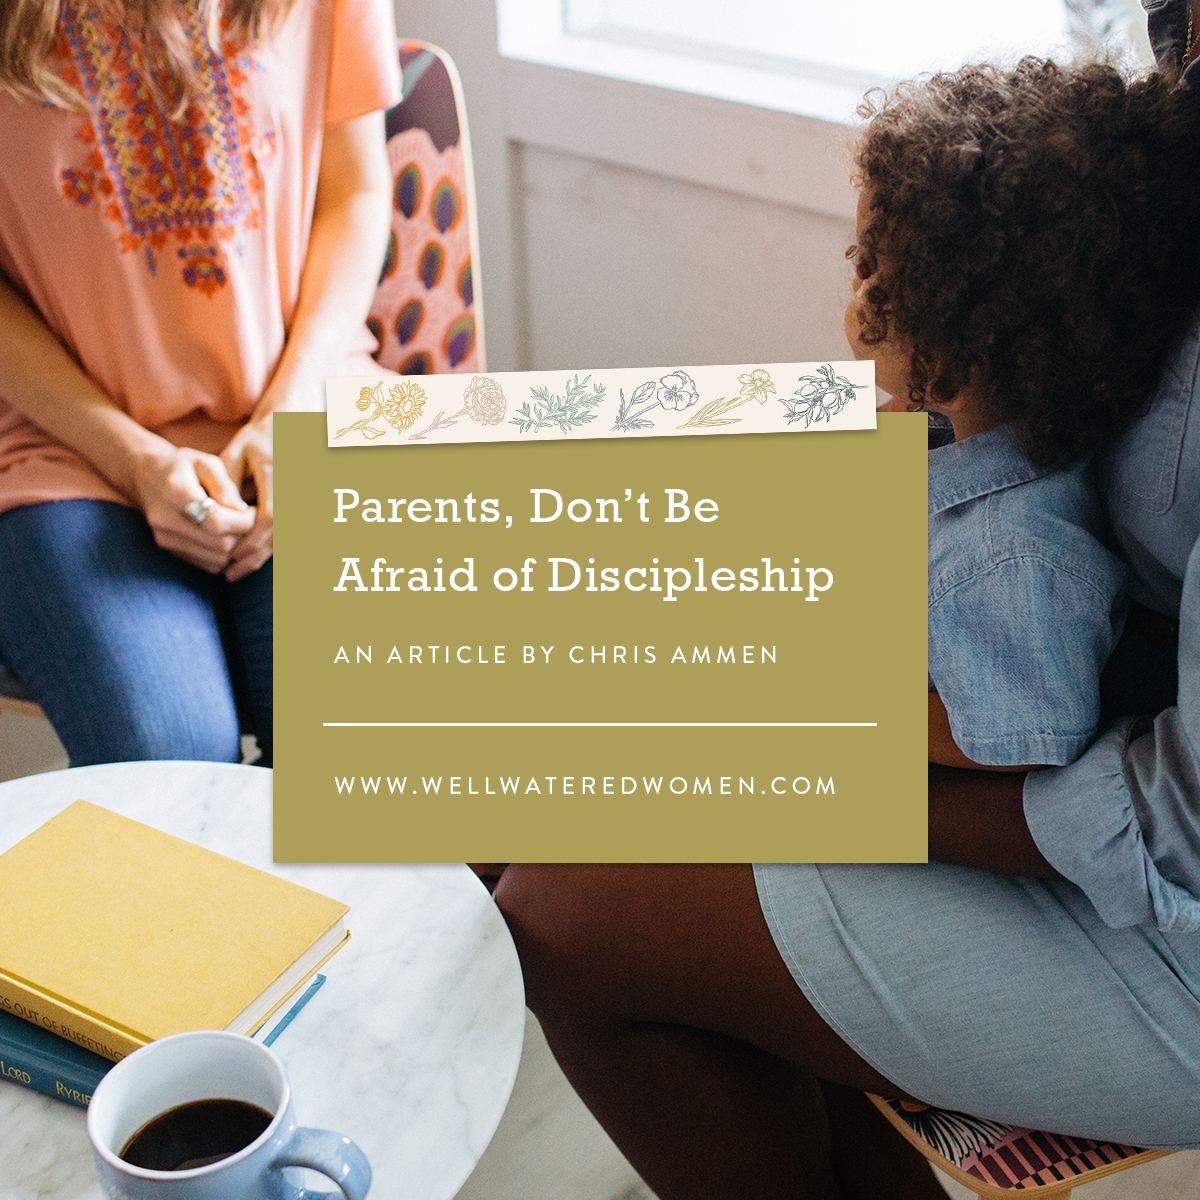 Parents, Don’t Be Afraid of Discipleship